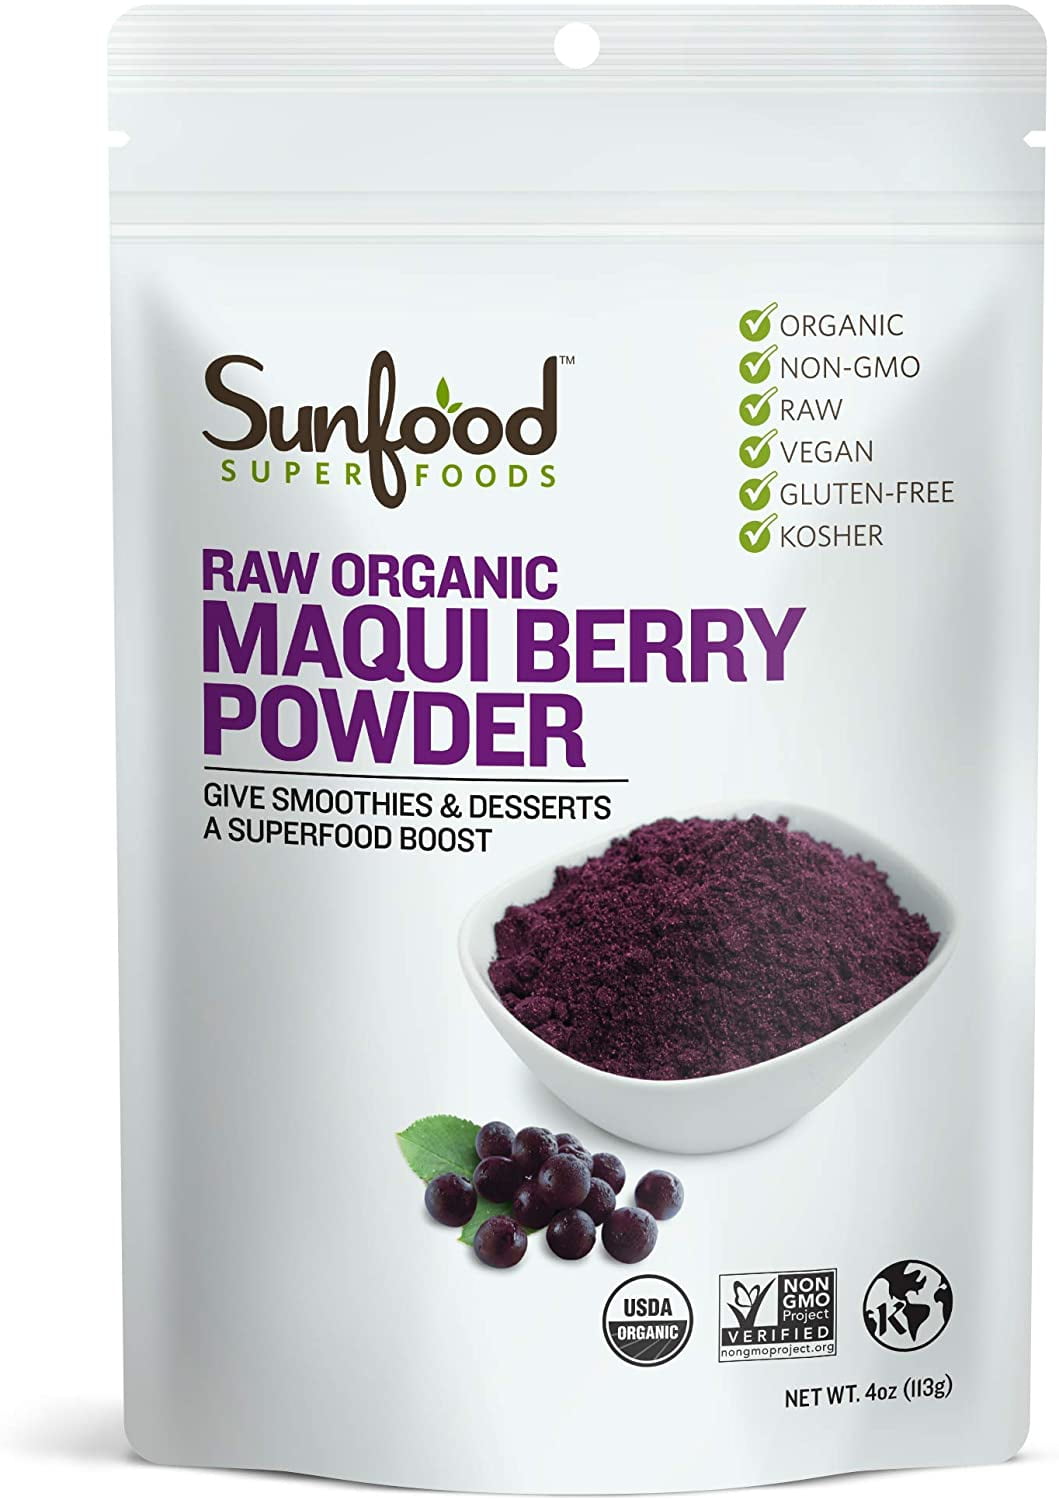 Amazing Grass, Green Superfood Blend Drink Mix Powder, the Original  Superfood Powder, 0.28 oz, 15 Packets 